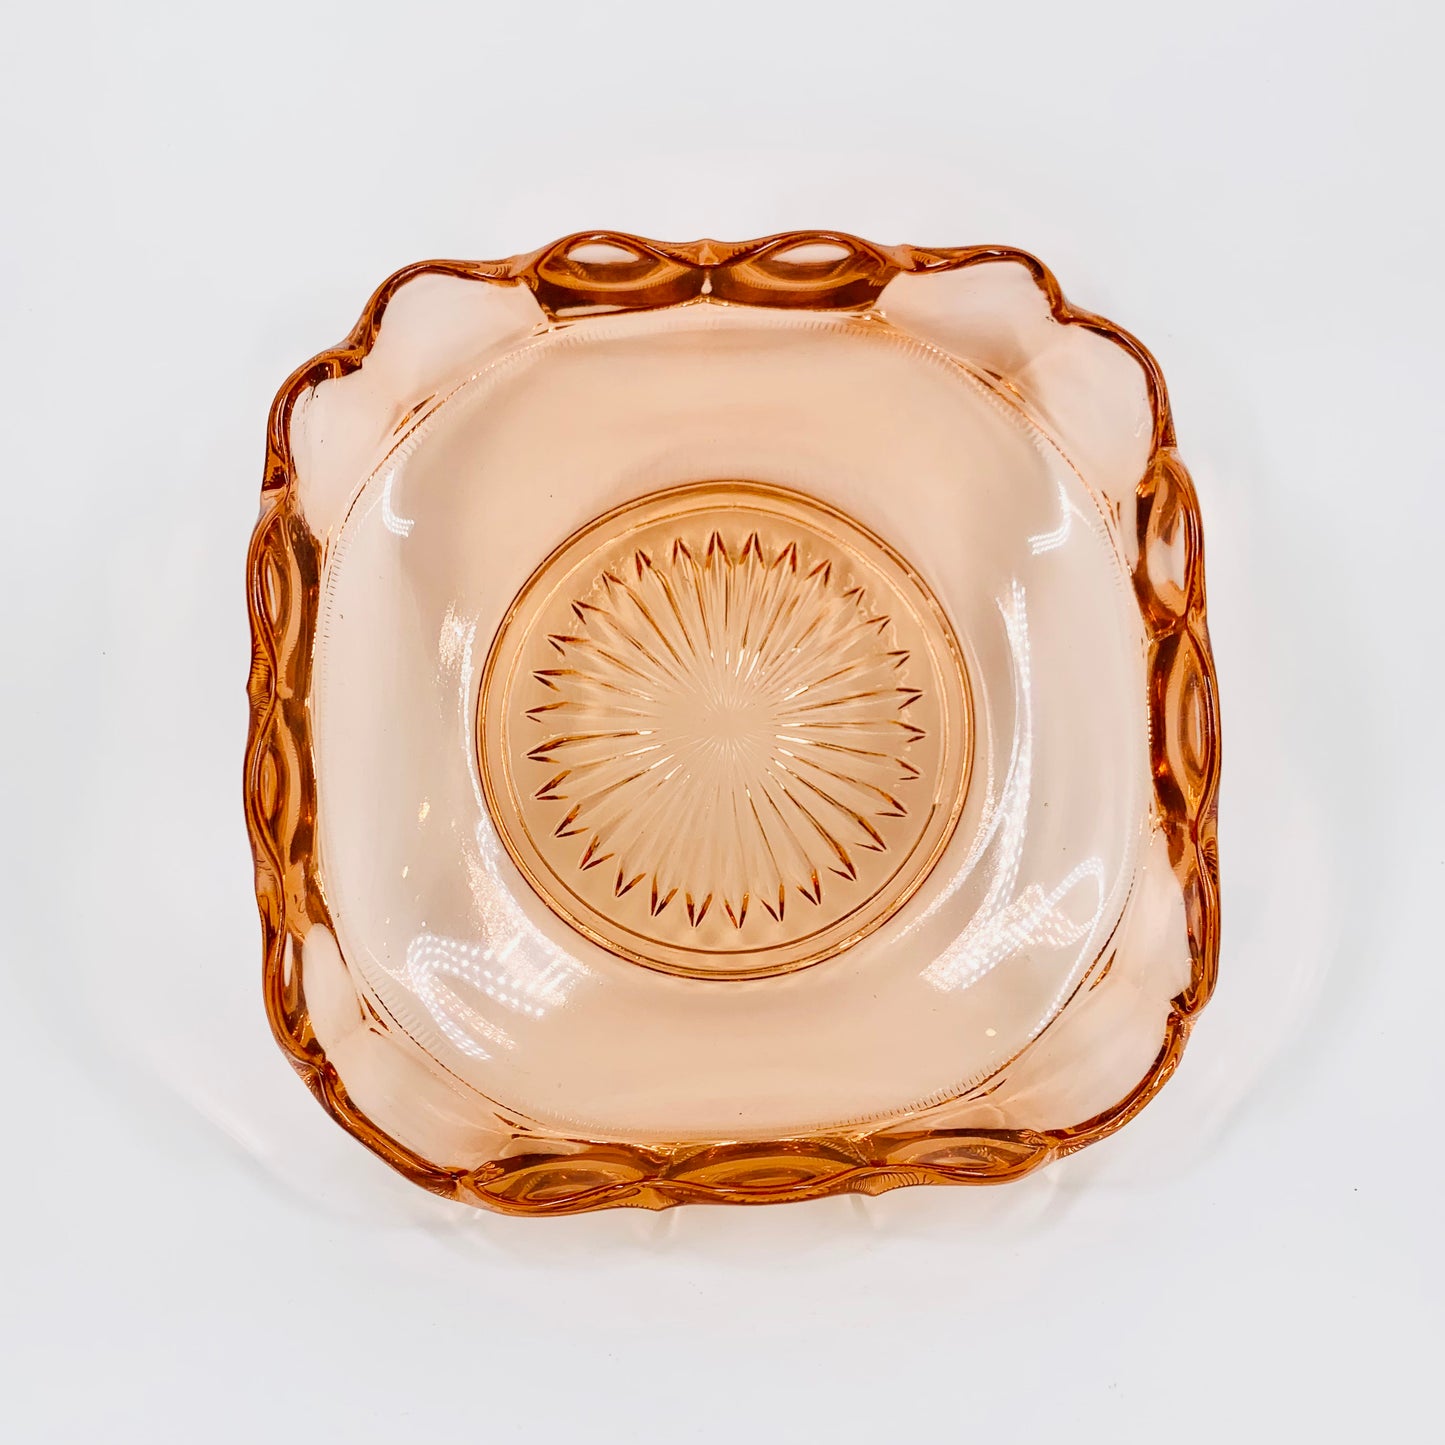 Antique Art Deco pink depression glass shallow serving bowl